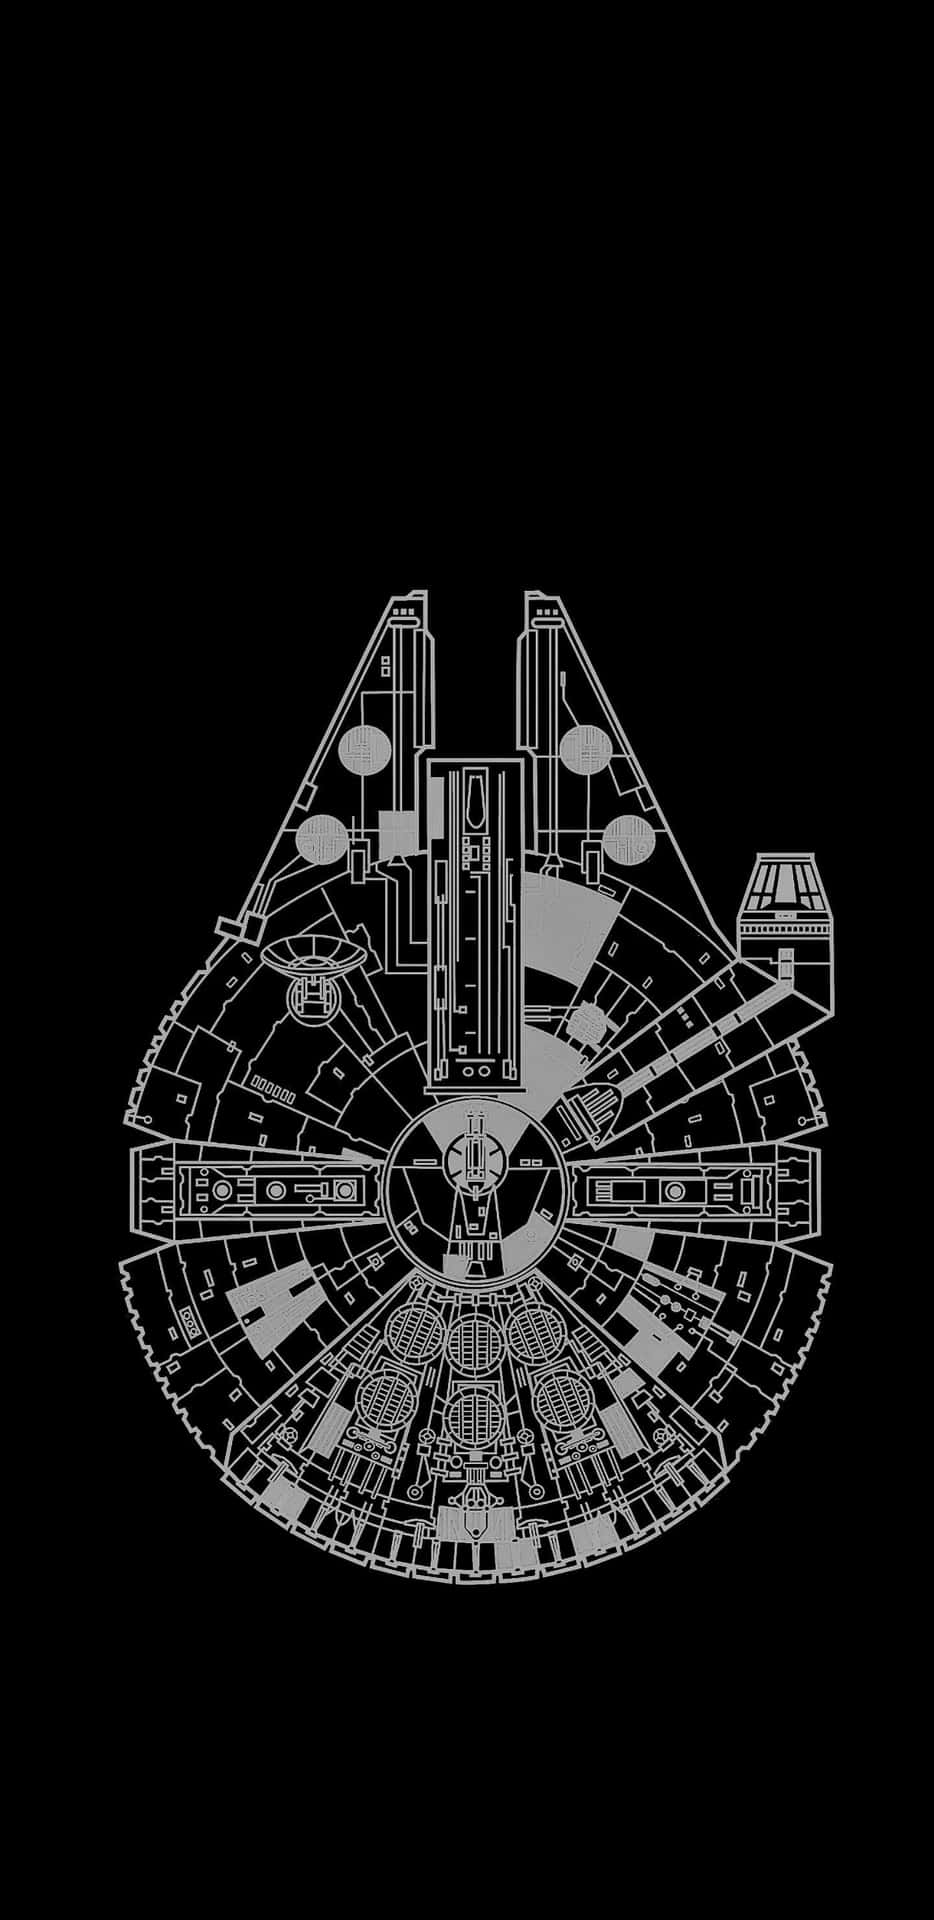 A Star Wars Millennium Falcon In Black And White Wallpaper